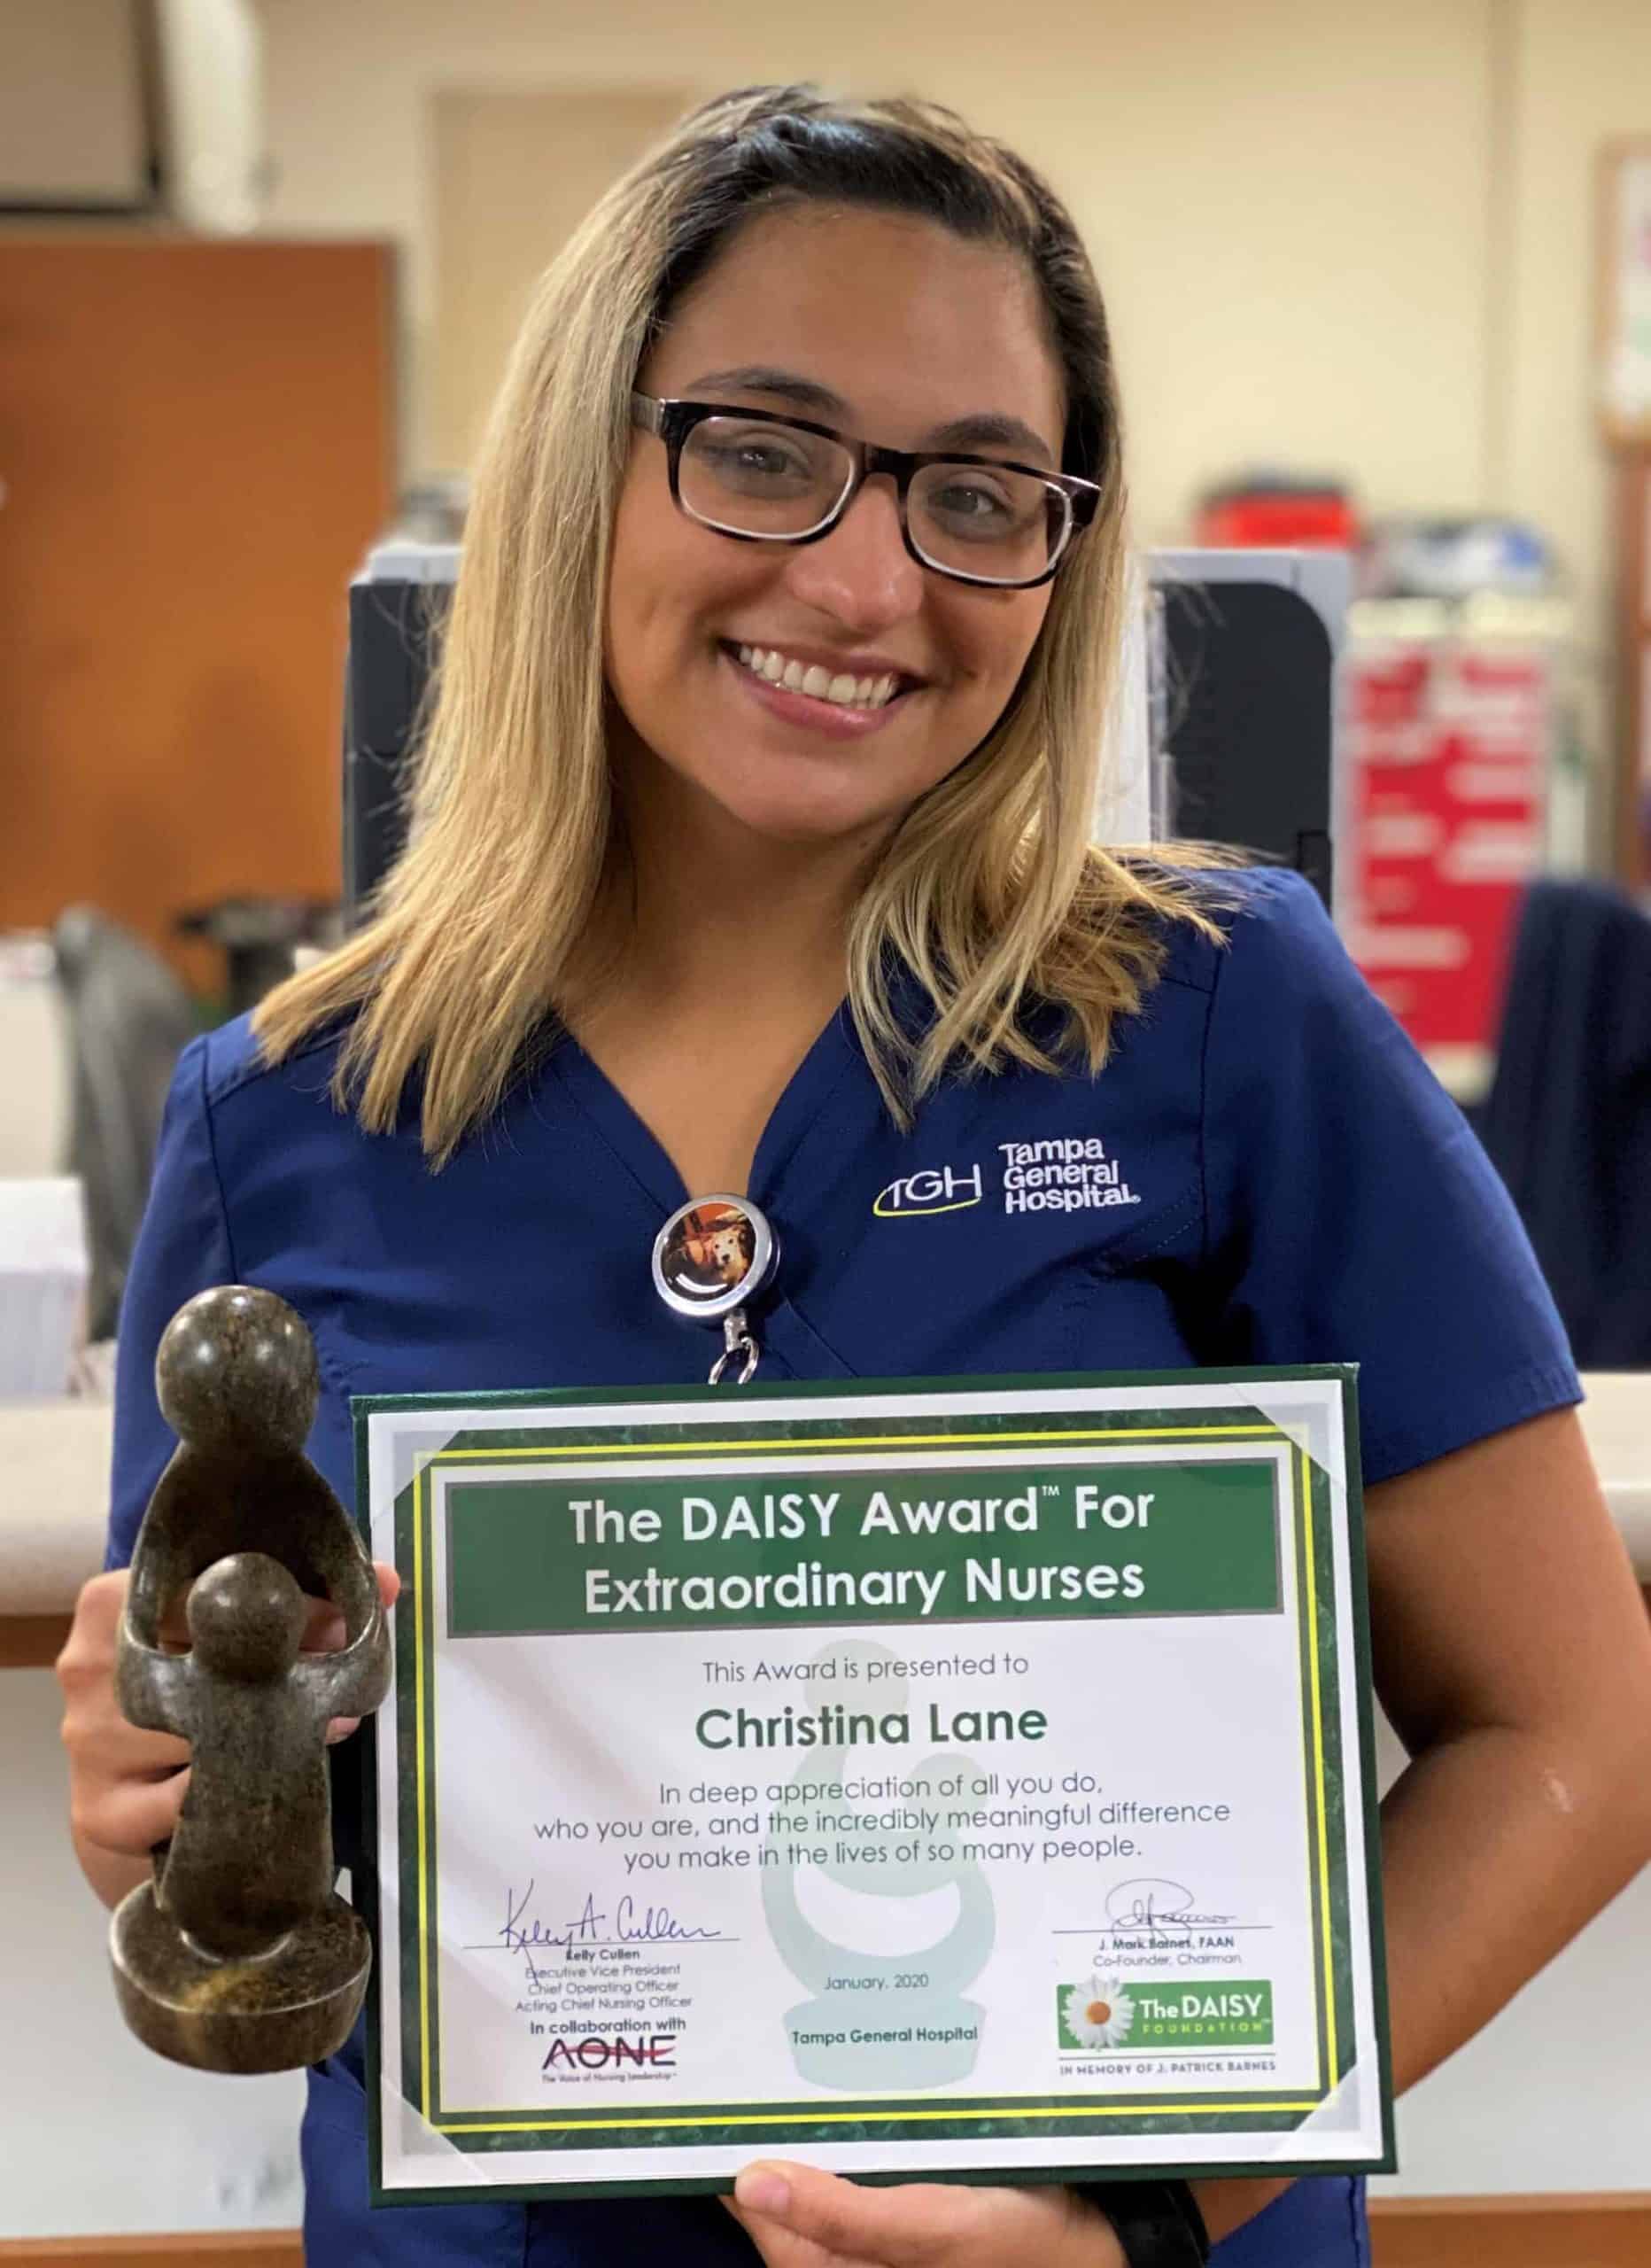 Nurse Christina Lane receiving The Daisy Award for being a compassionate advocate